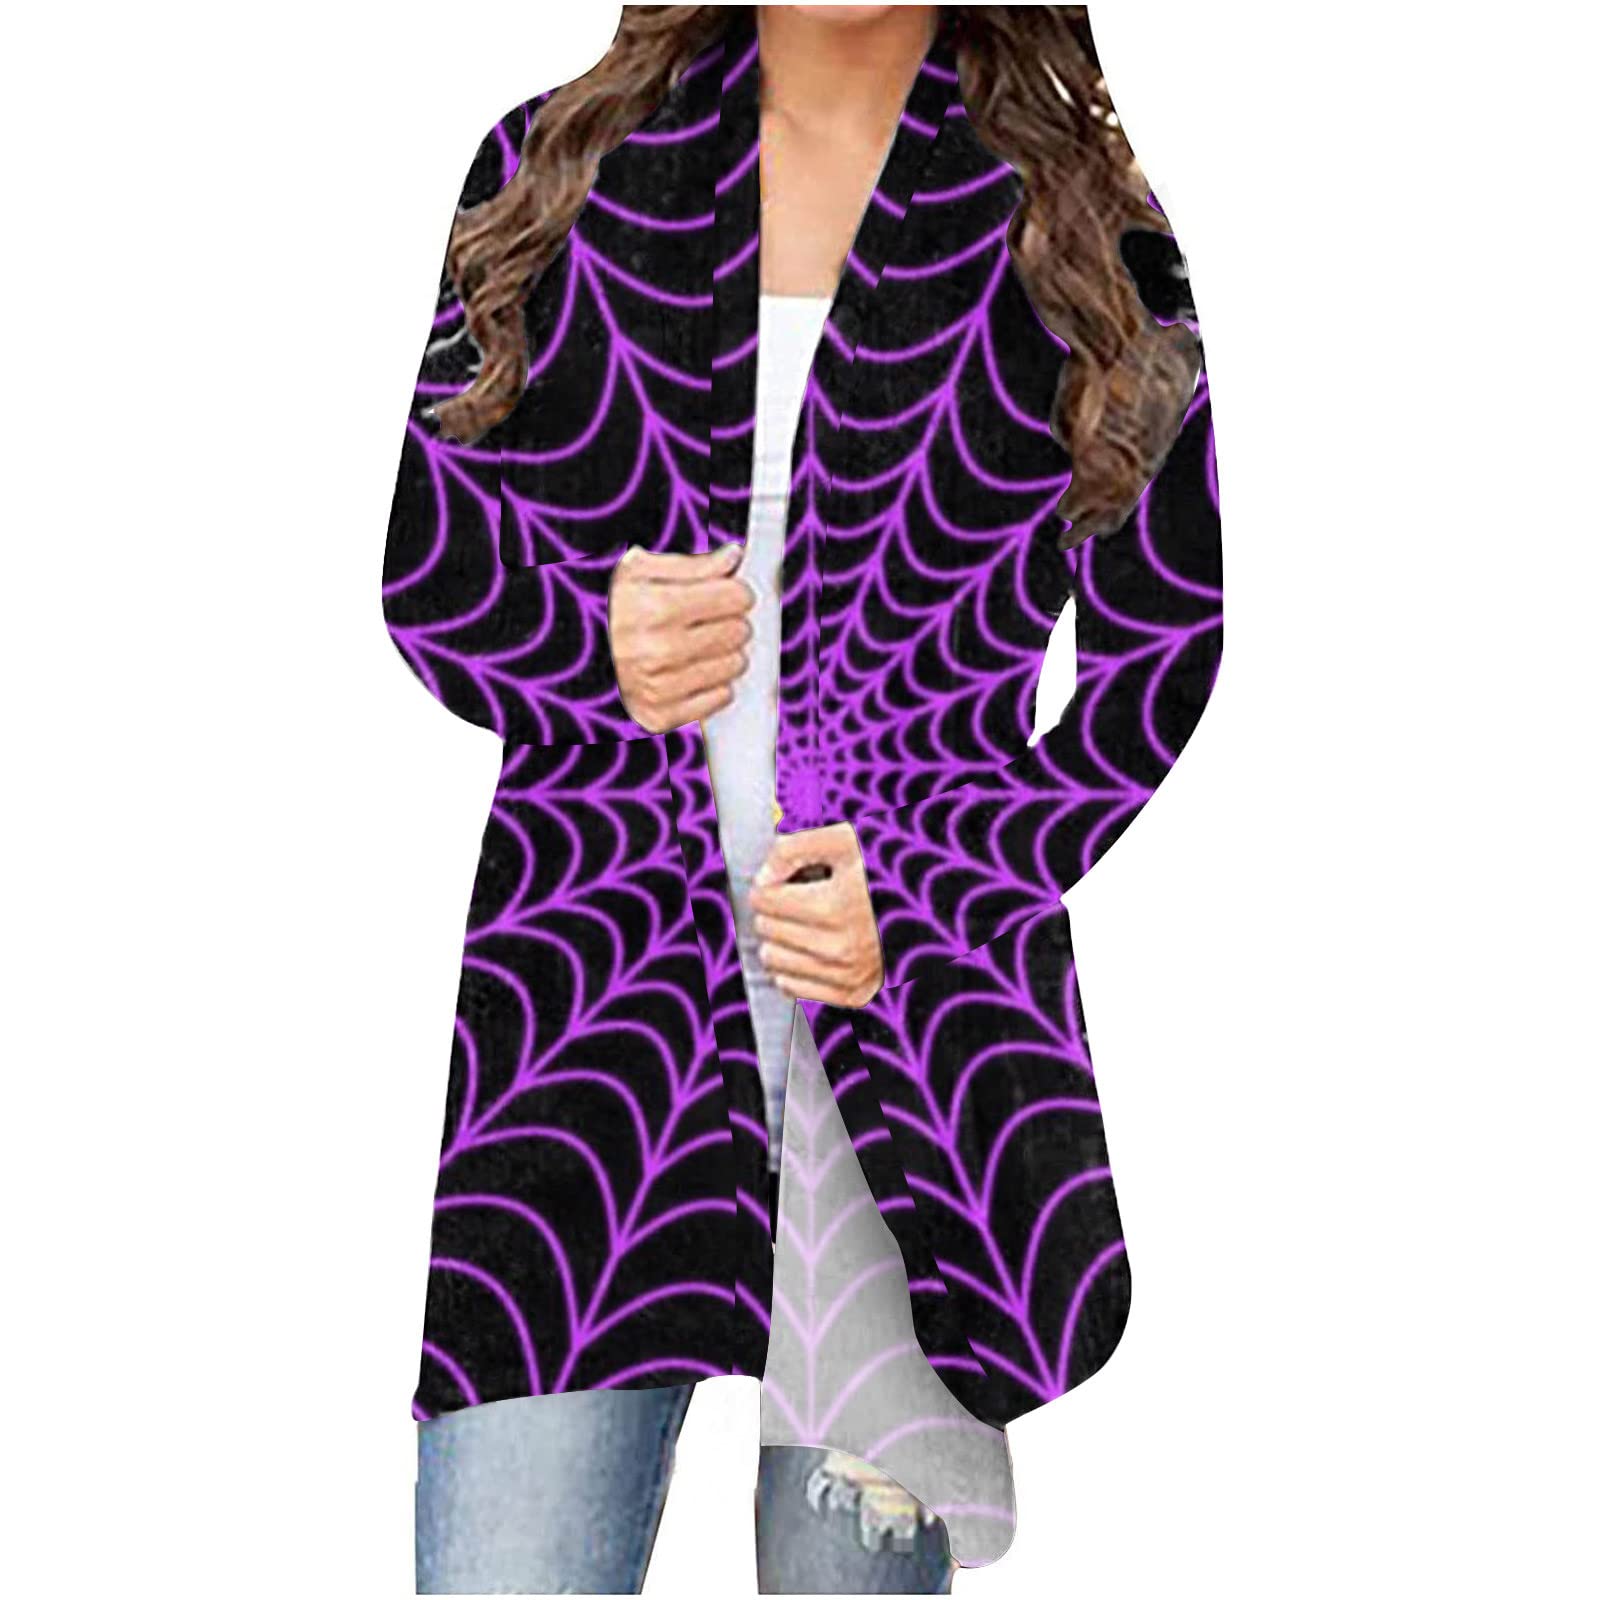 hlysgo Novelty Printed Hallowen Costumes for Women, Long Sleeve Comfortable  Plus Size Cardigans T-Shirts Purple Medium